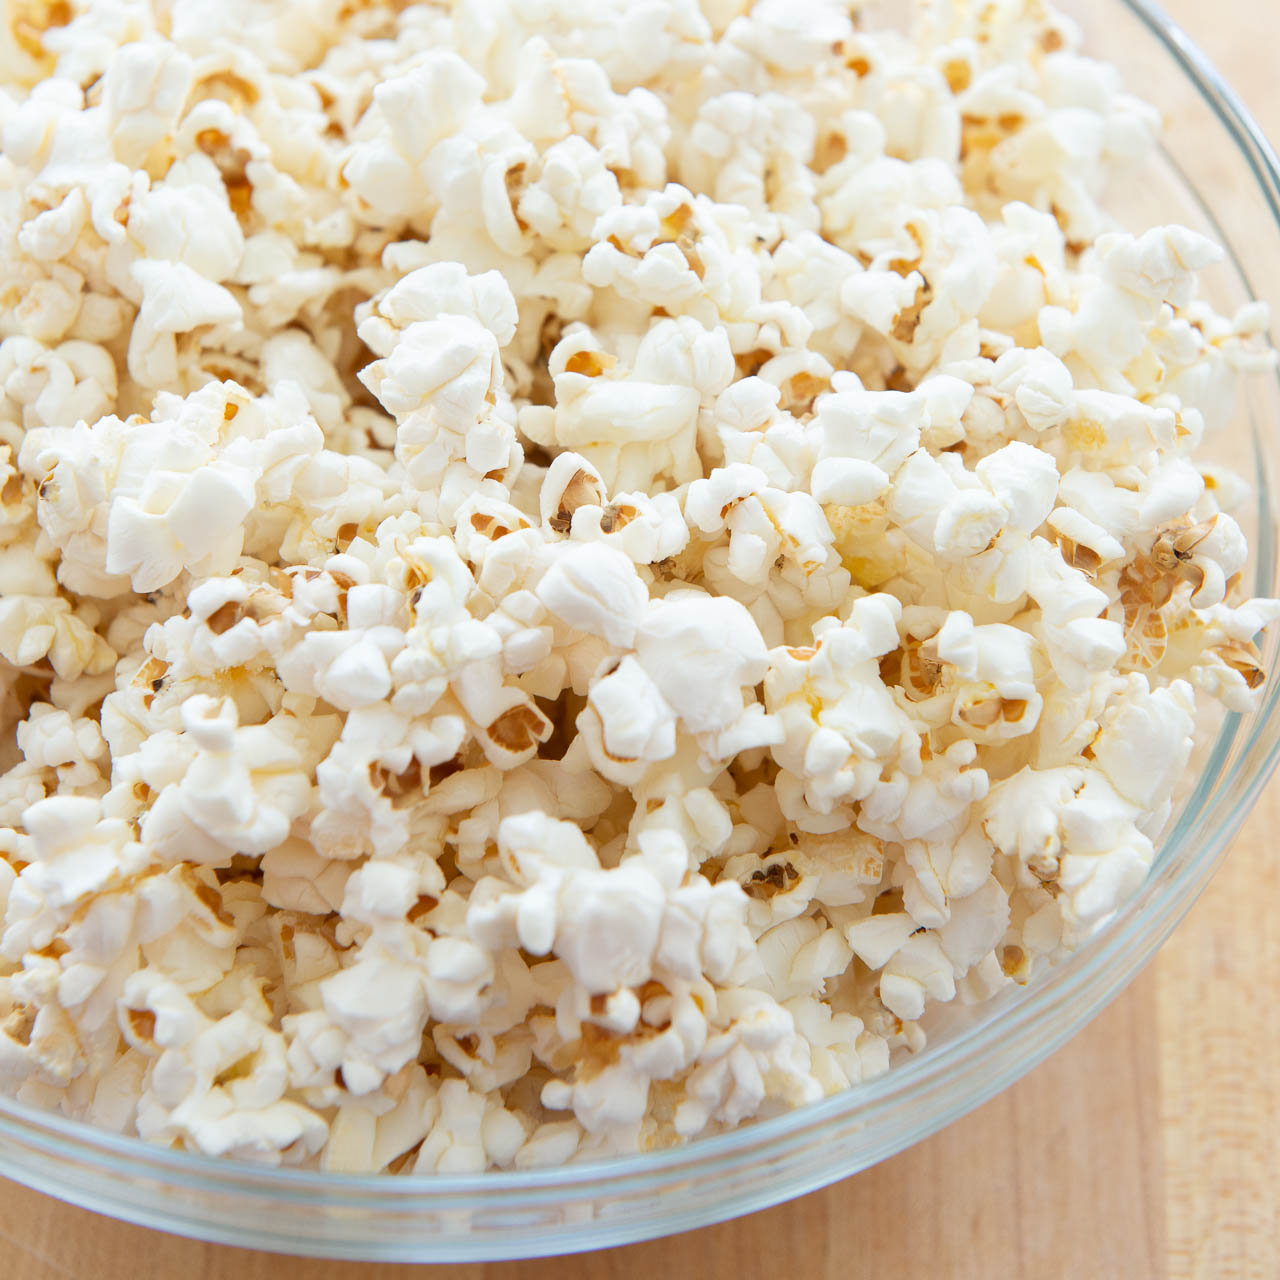 Popcorn Popcorn as